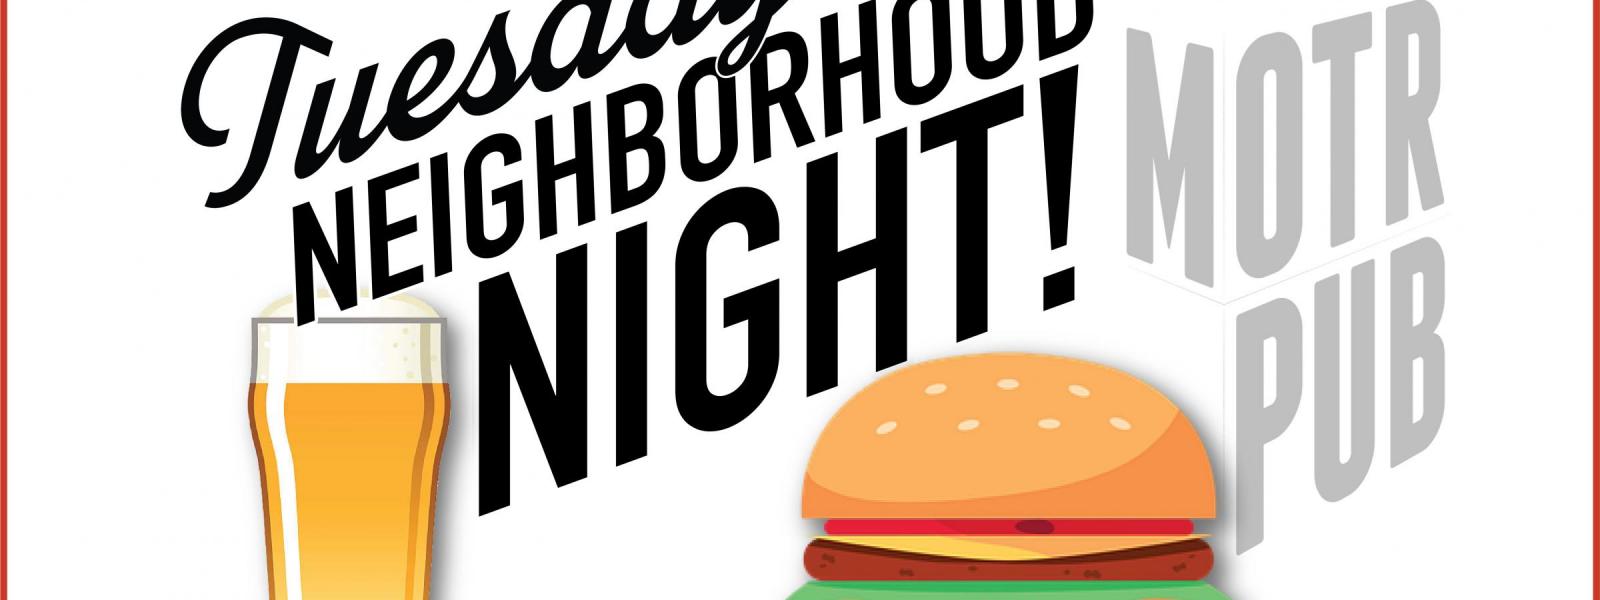 Neighborhood Night at MOTR Pub Tuesday Nights Cincinnati Nightlife